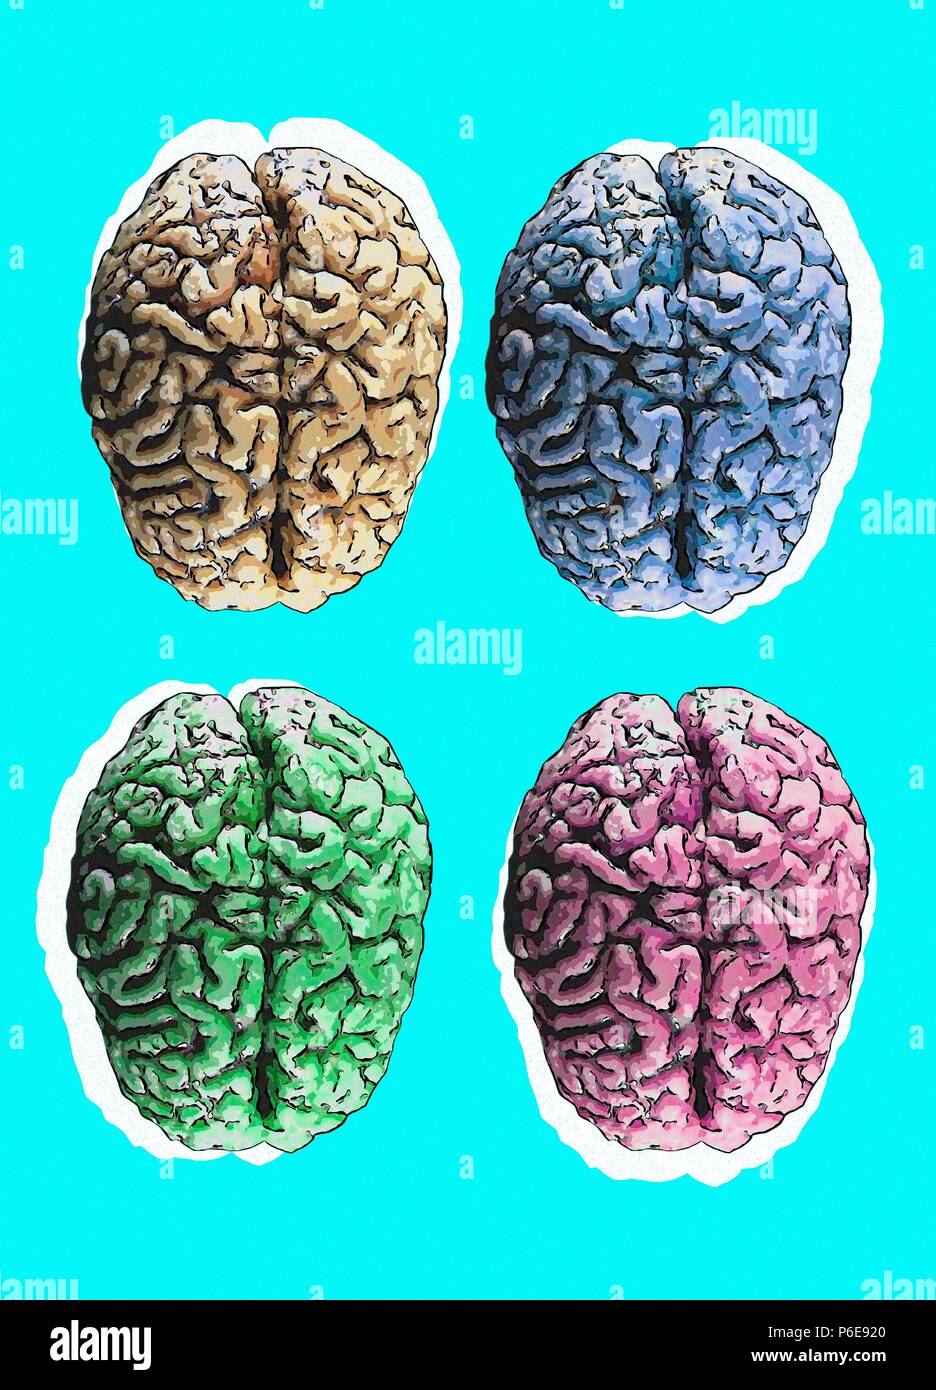 Human brains against blue background, illustration. Stock Photo